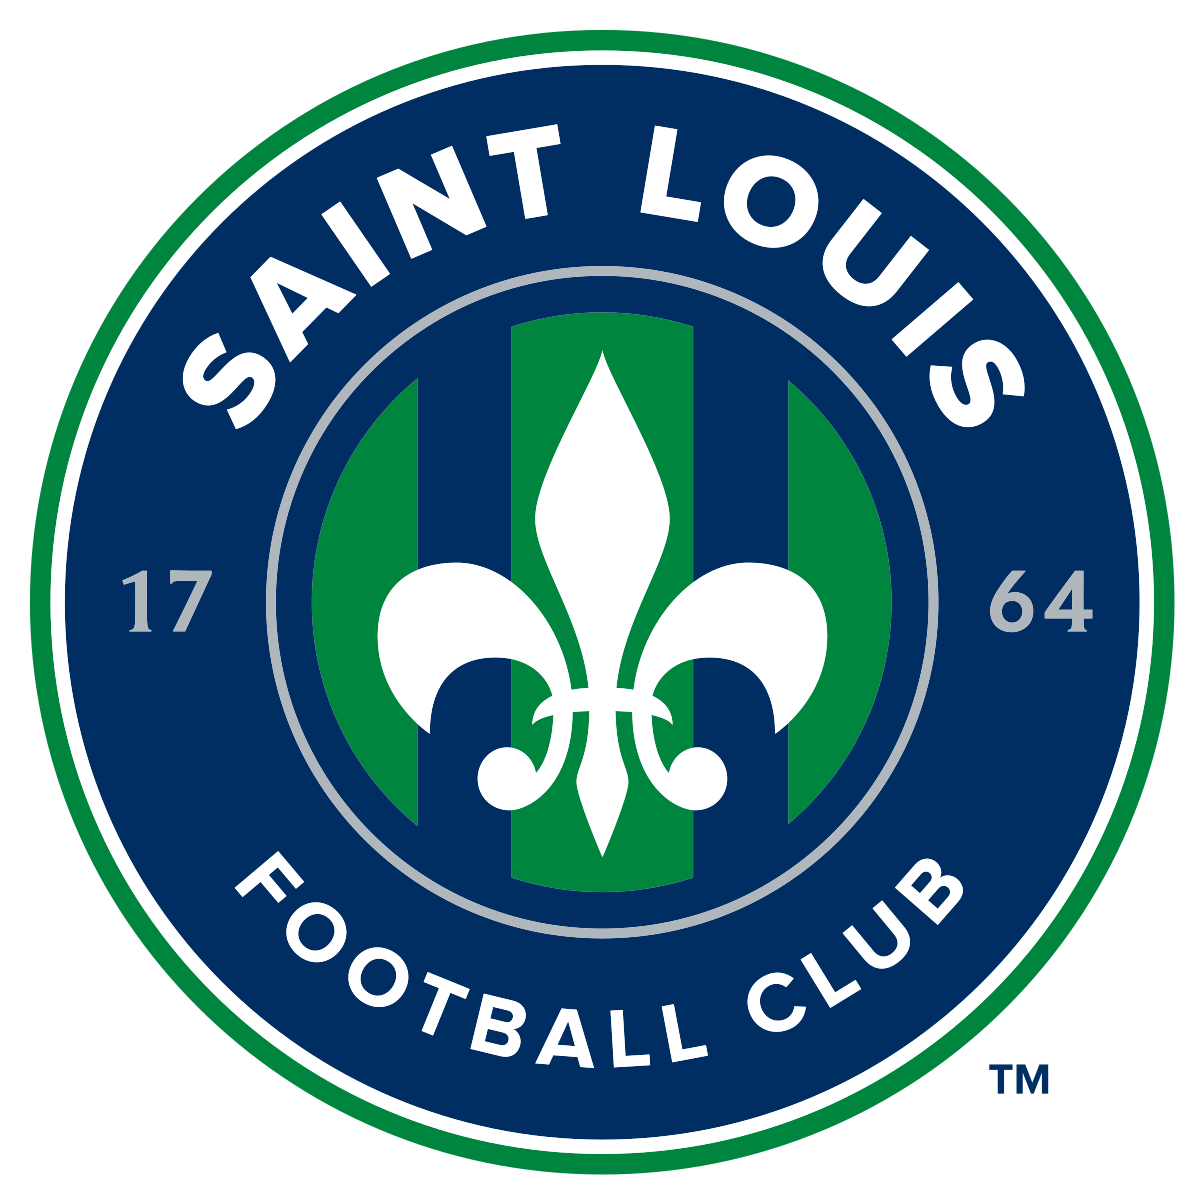 Fc st. Football Club логотип. Сент эмблема ФК. St. Louis City FC logo. St логотип.